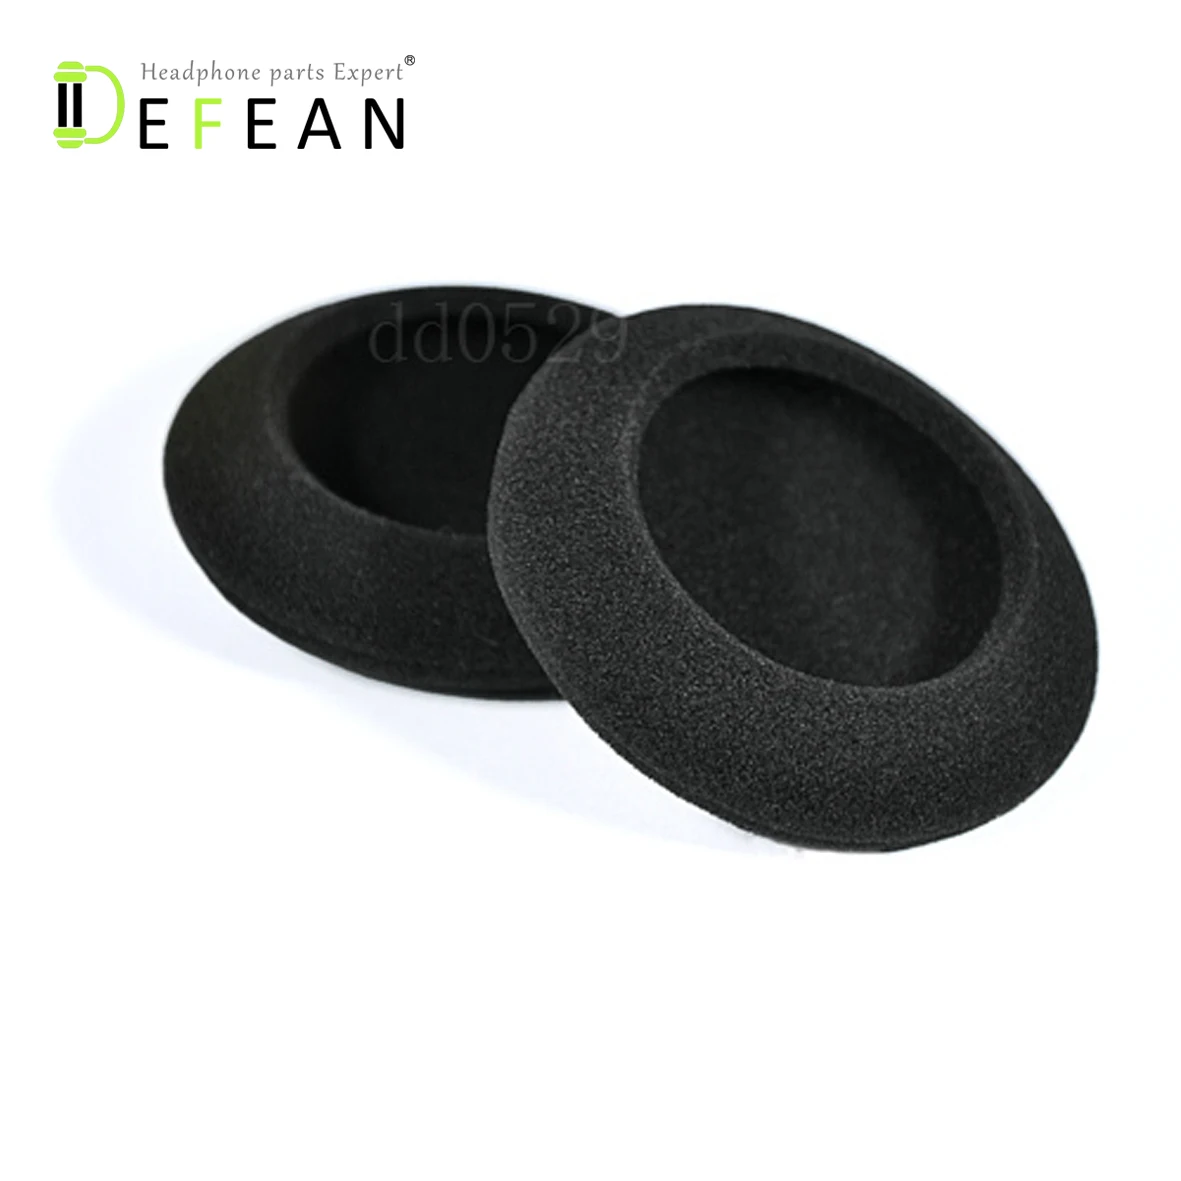 4 Pair 60mm Replacement Ear Foam Earphone Pad Covers for Headphone Black J8R1